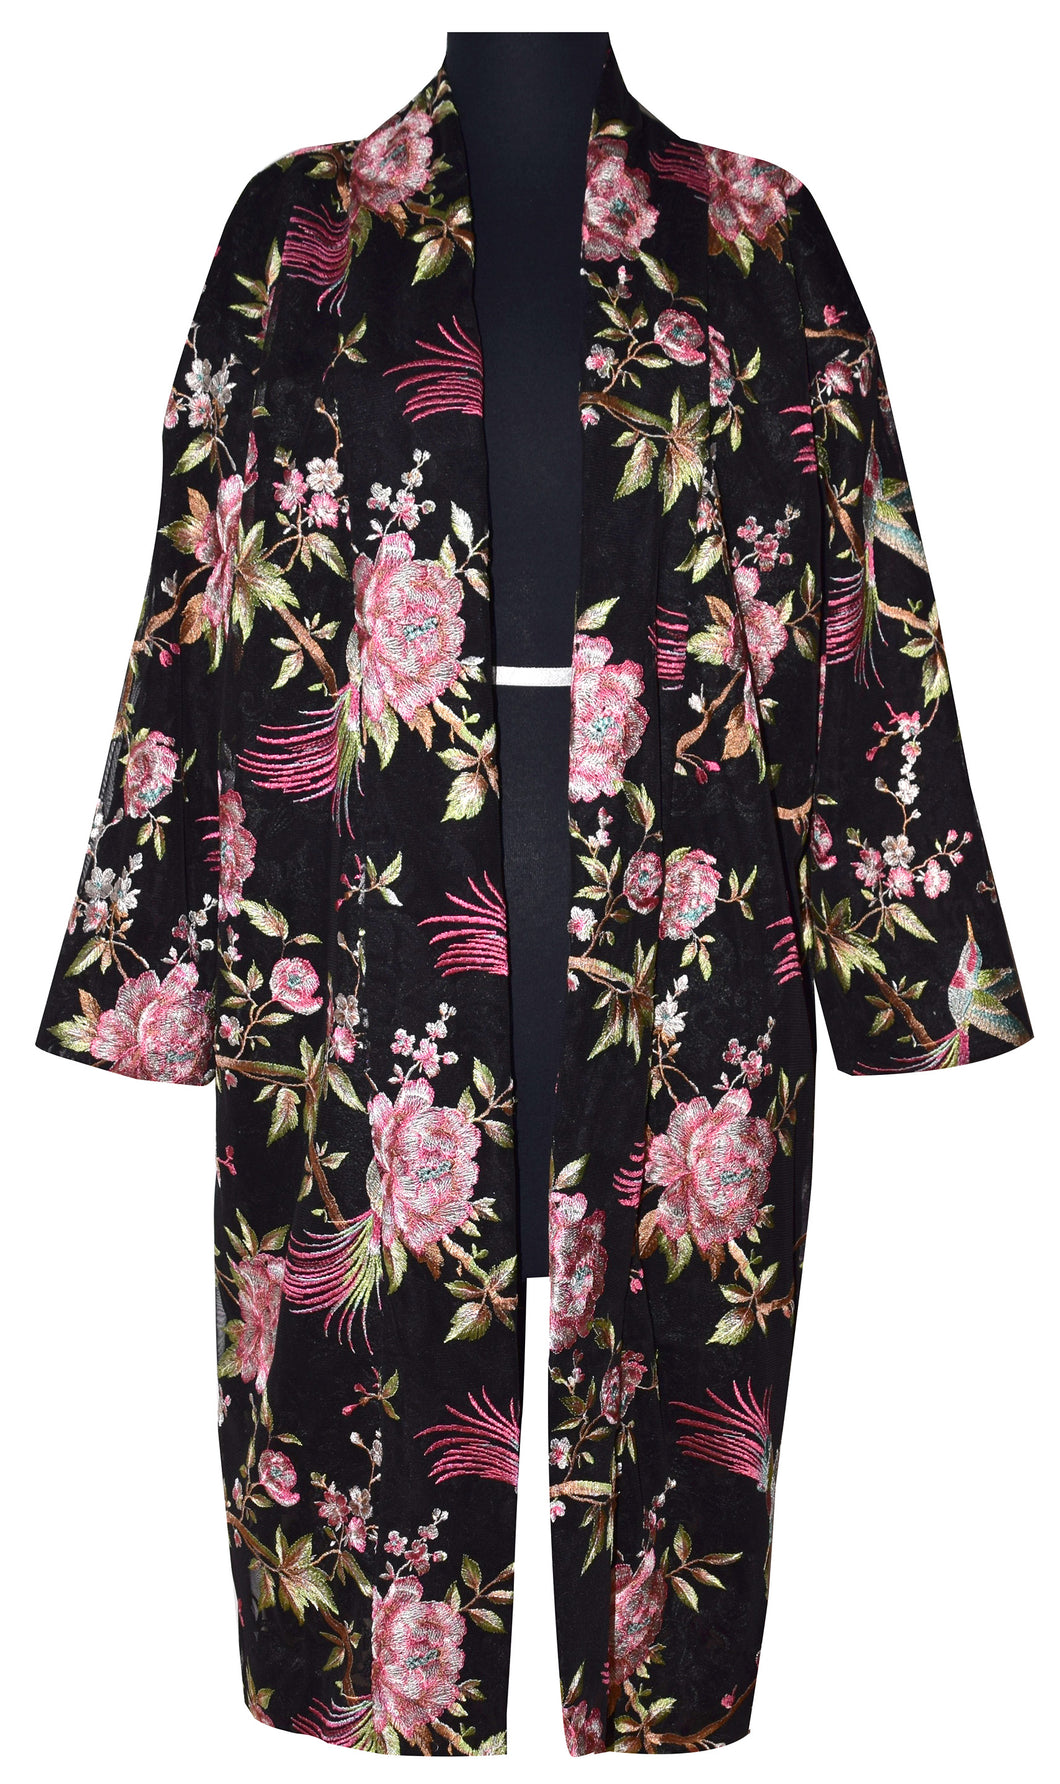 Embroidered Floral Hummingbird Lace Kimono Style Jacket